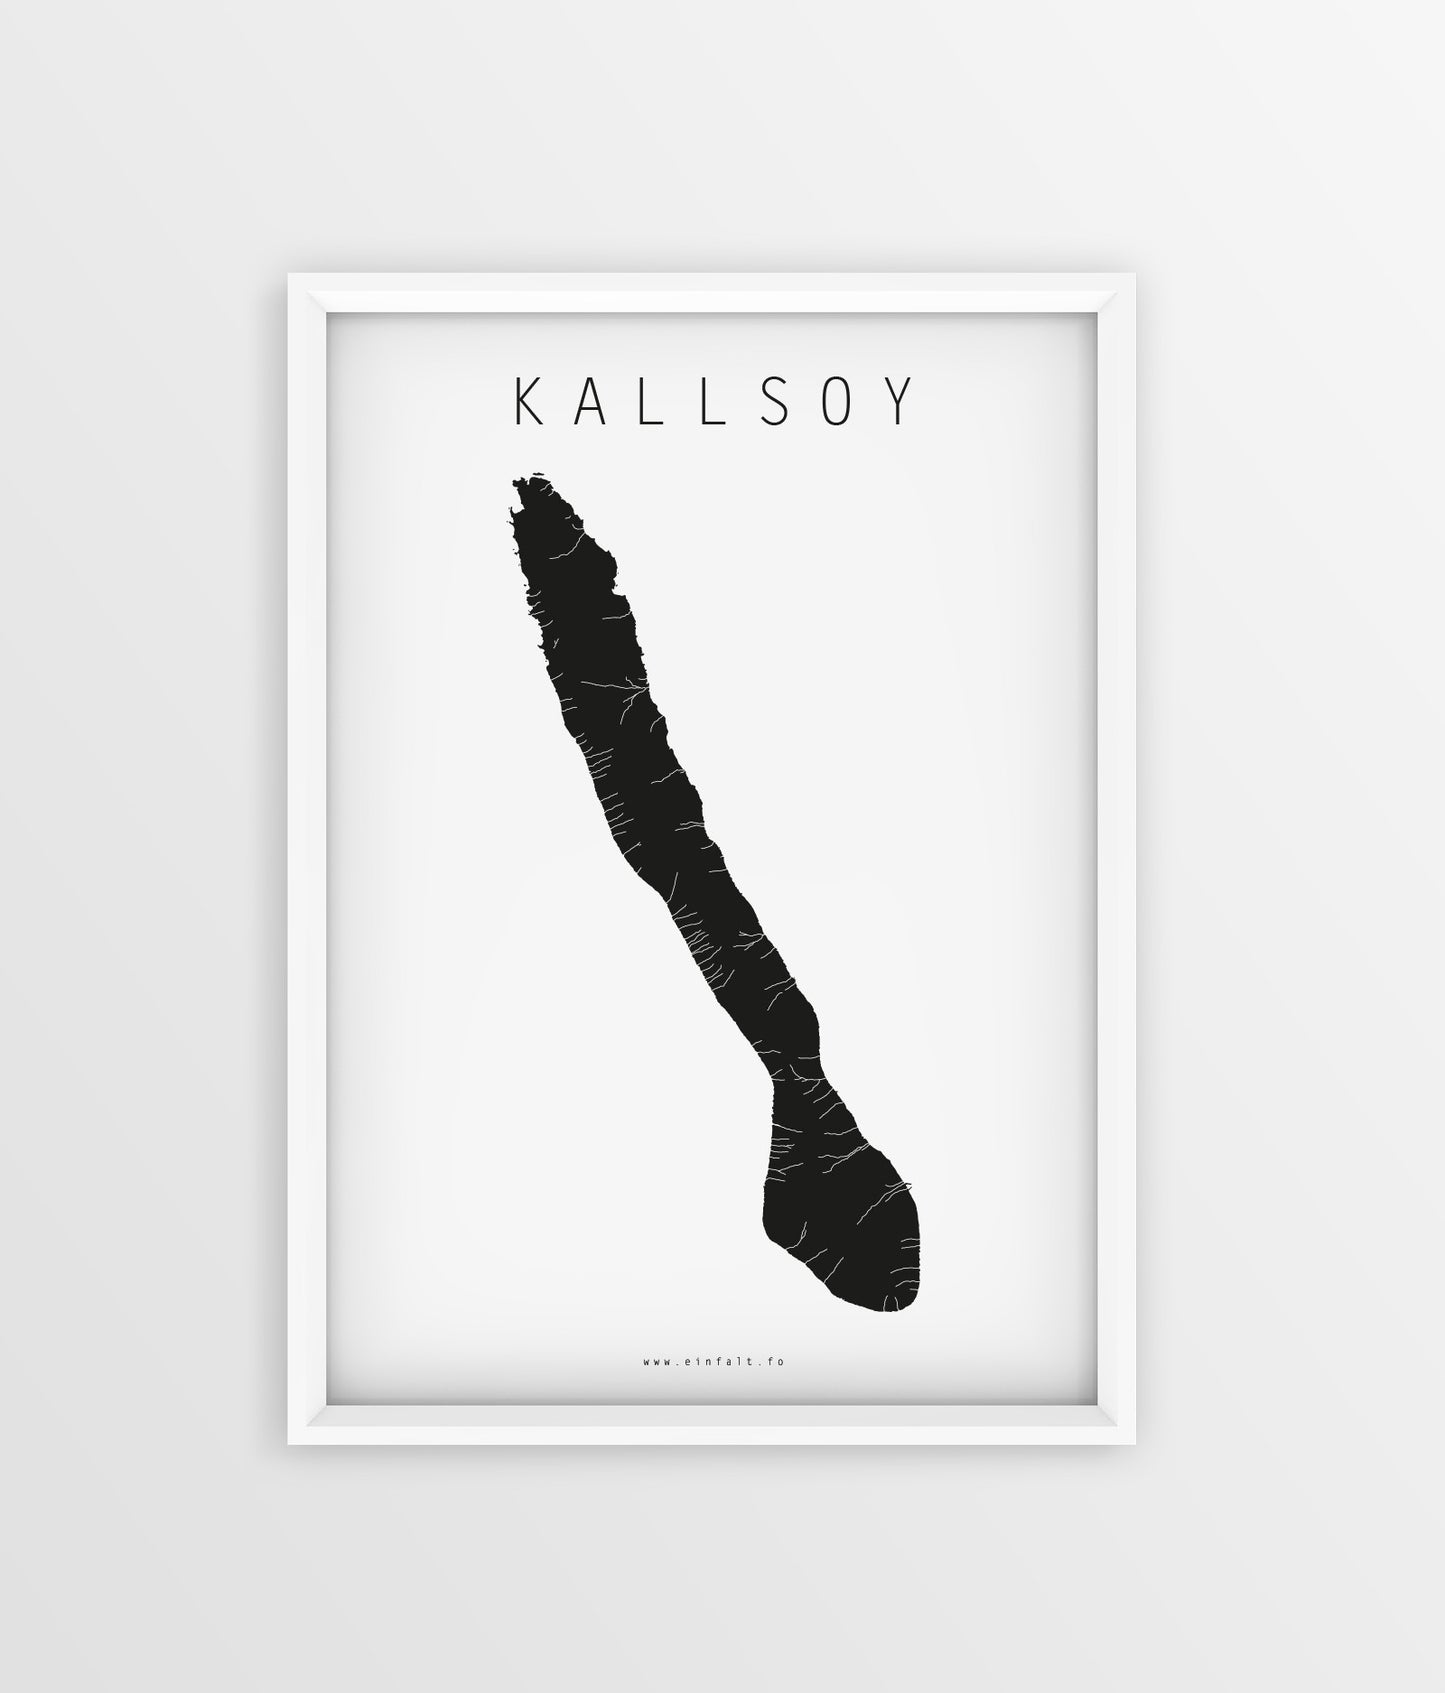 18 oyggjar - Kallsoy - Plakatir - Faroe islands posters - Færøske plakater - Føroyar - Færøerne - Føroyakort